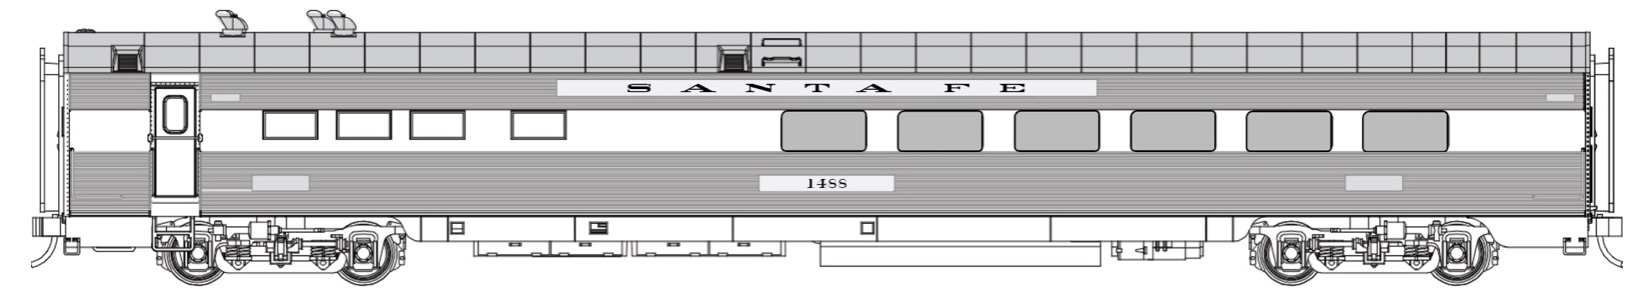 N Scale - RailSmith - 754008 - Passenger Car, Pullman, Fluted, Diner - Santa Fe - 1488